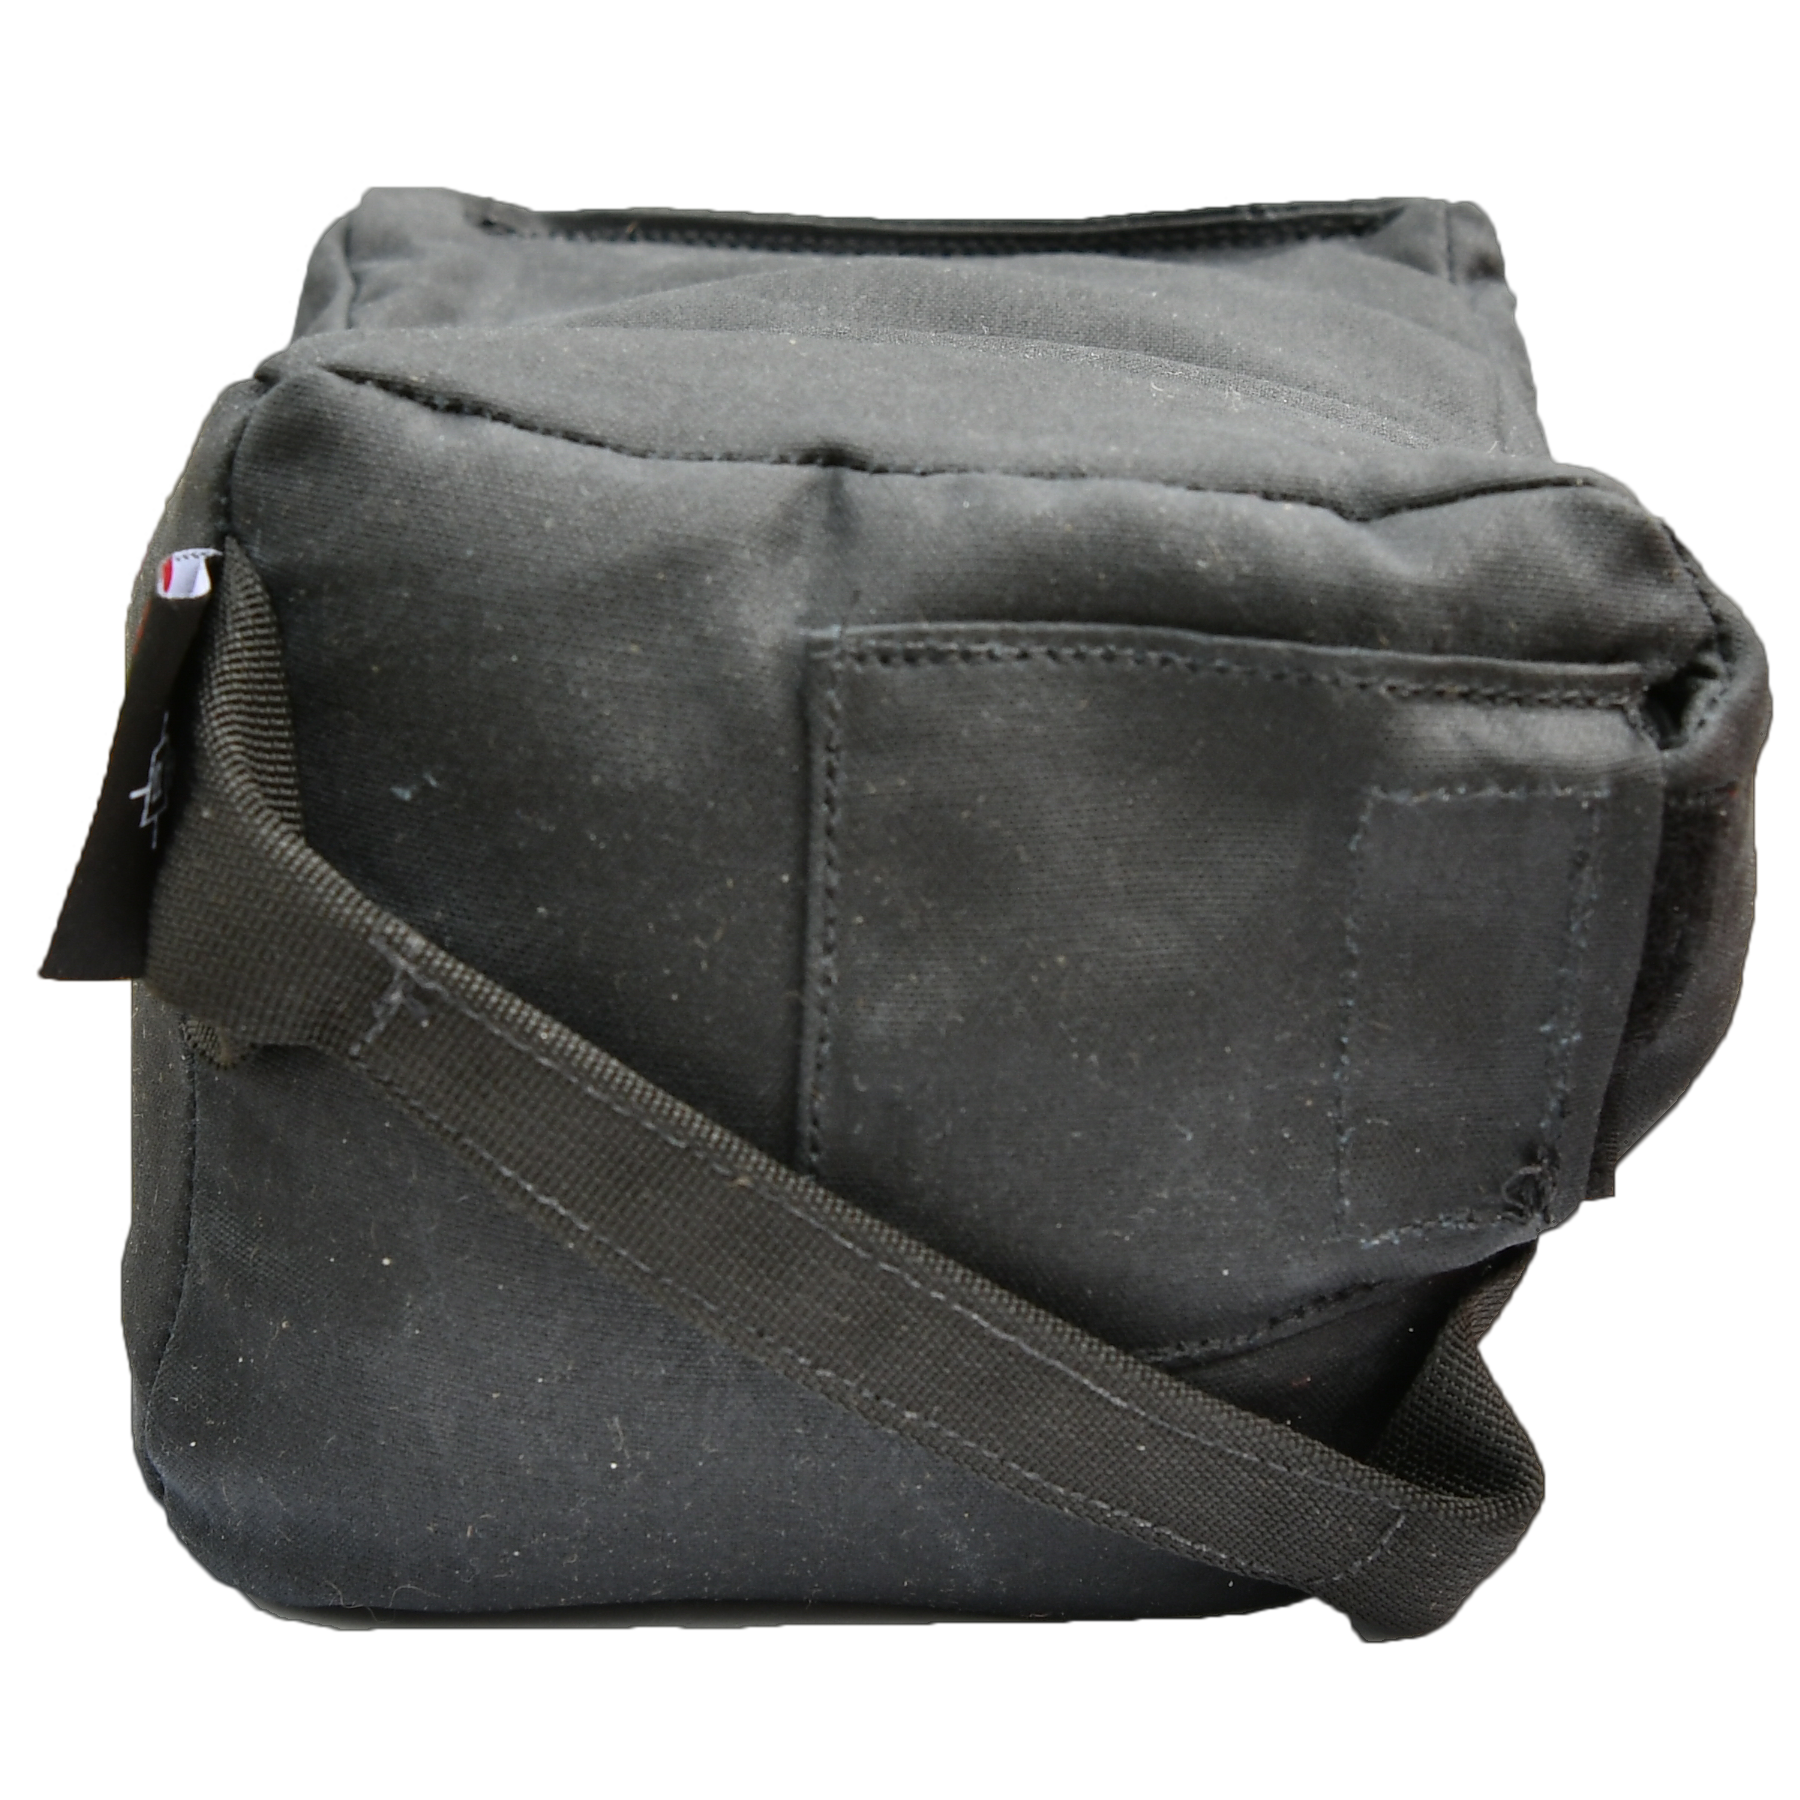 APA Limited Edition Shmedium Sized Game Changer Bag*